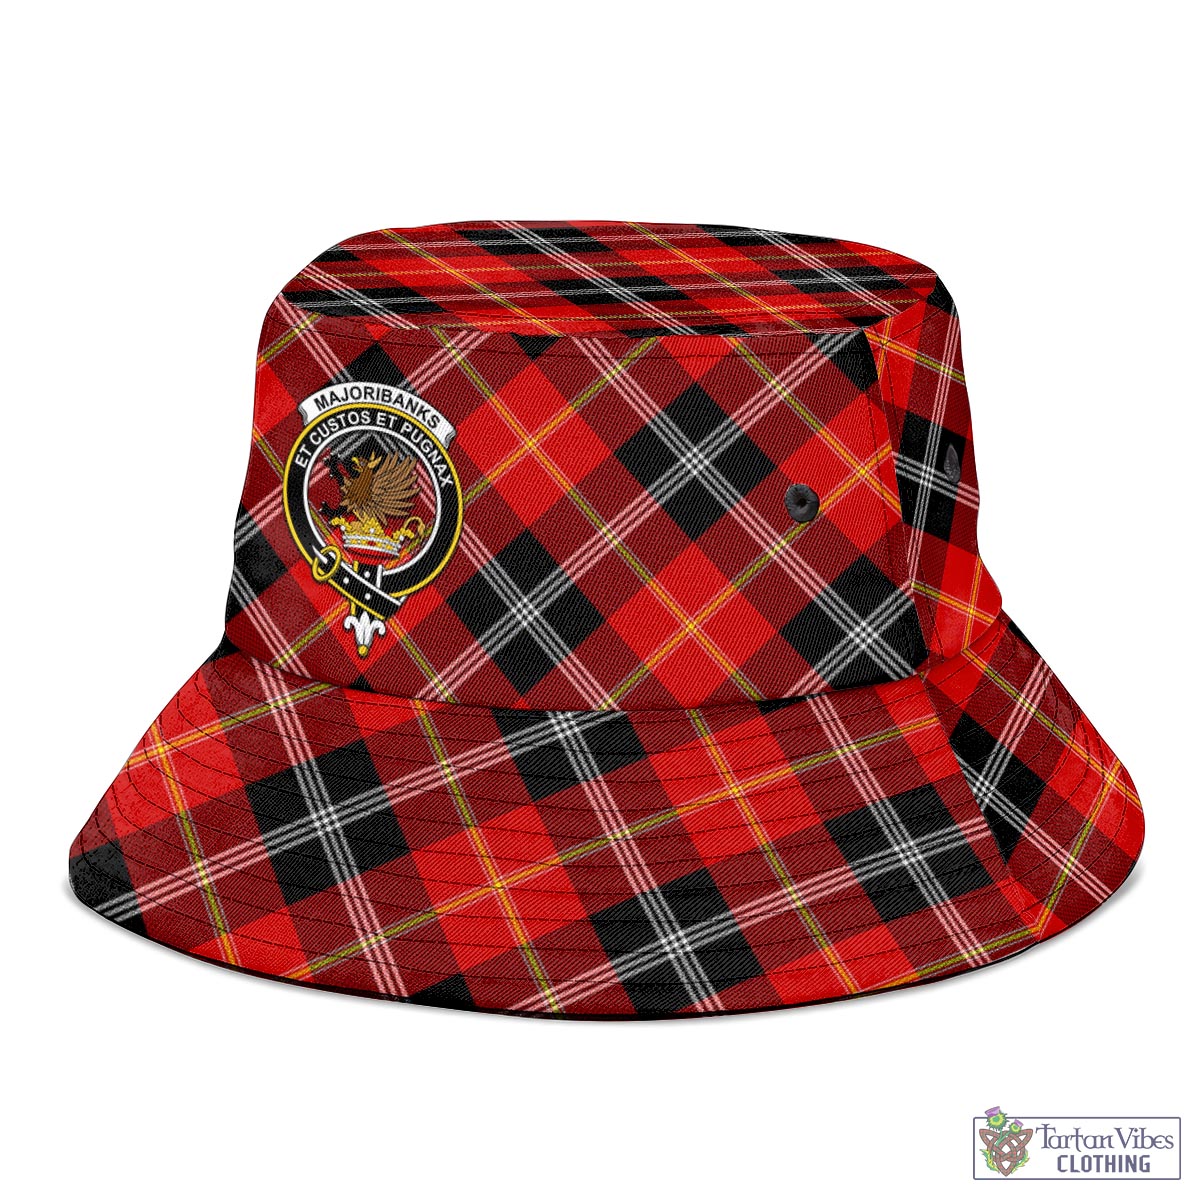 Tartan Vibes Clothing Majoribanks Tartan Bucket Hat with Family Crest